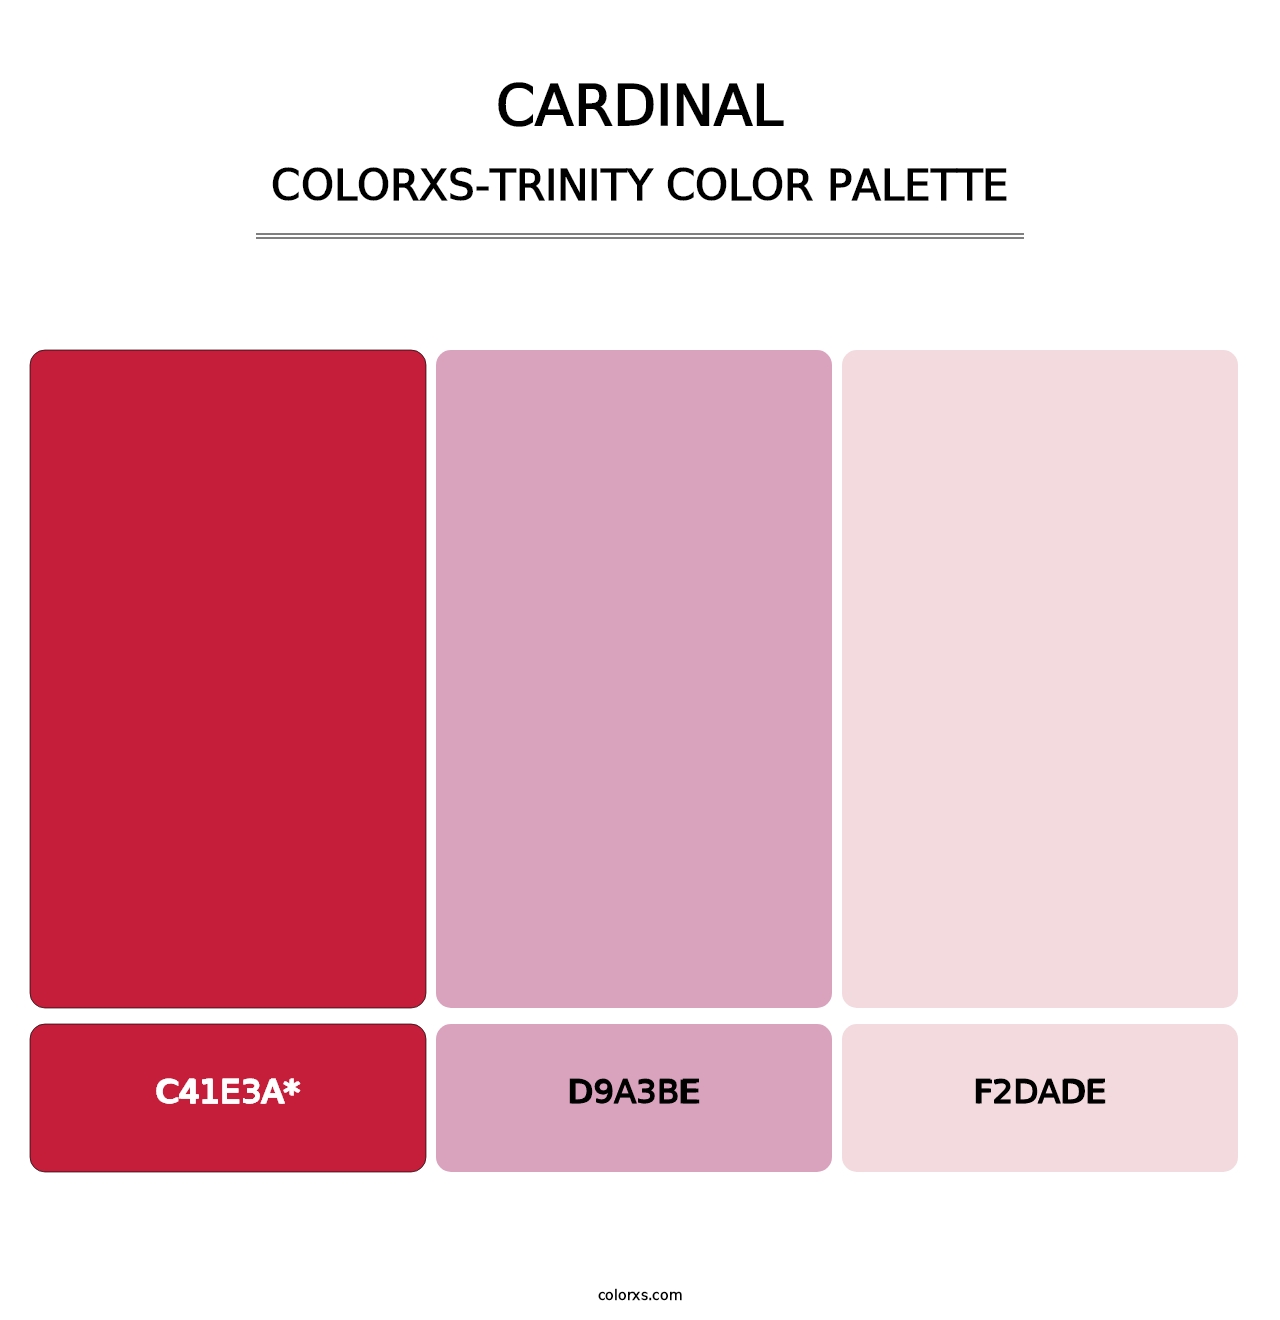 Cardinal - Colorxs Trinity Palette